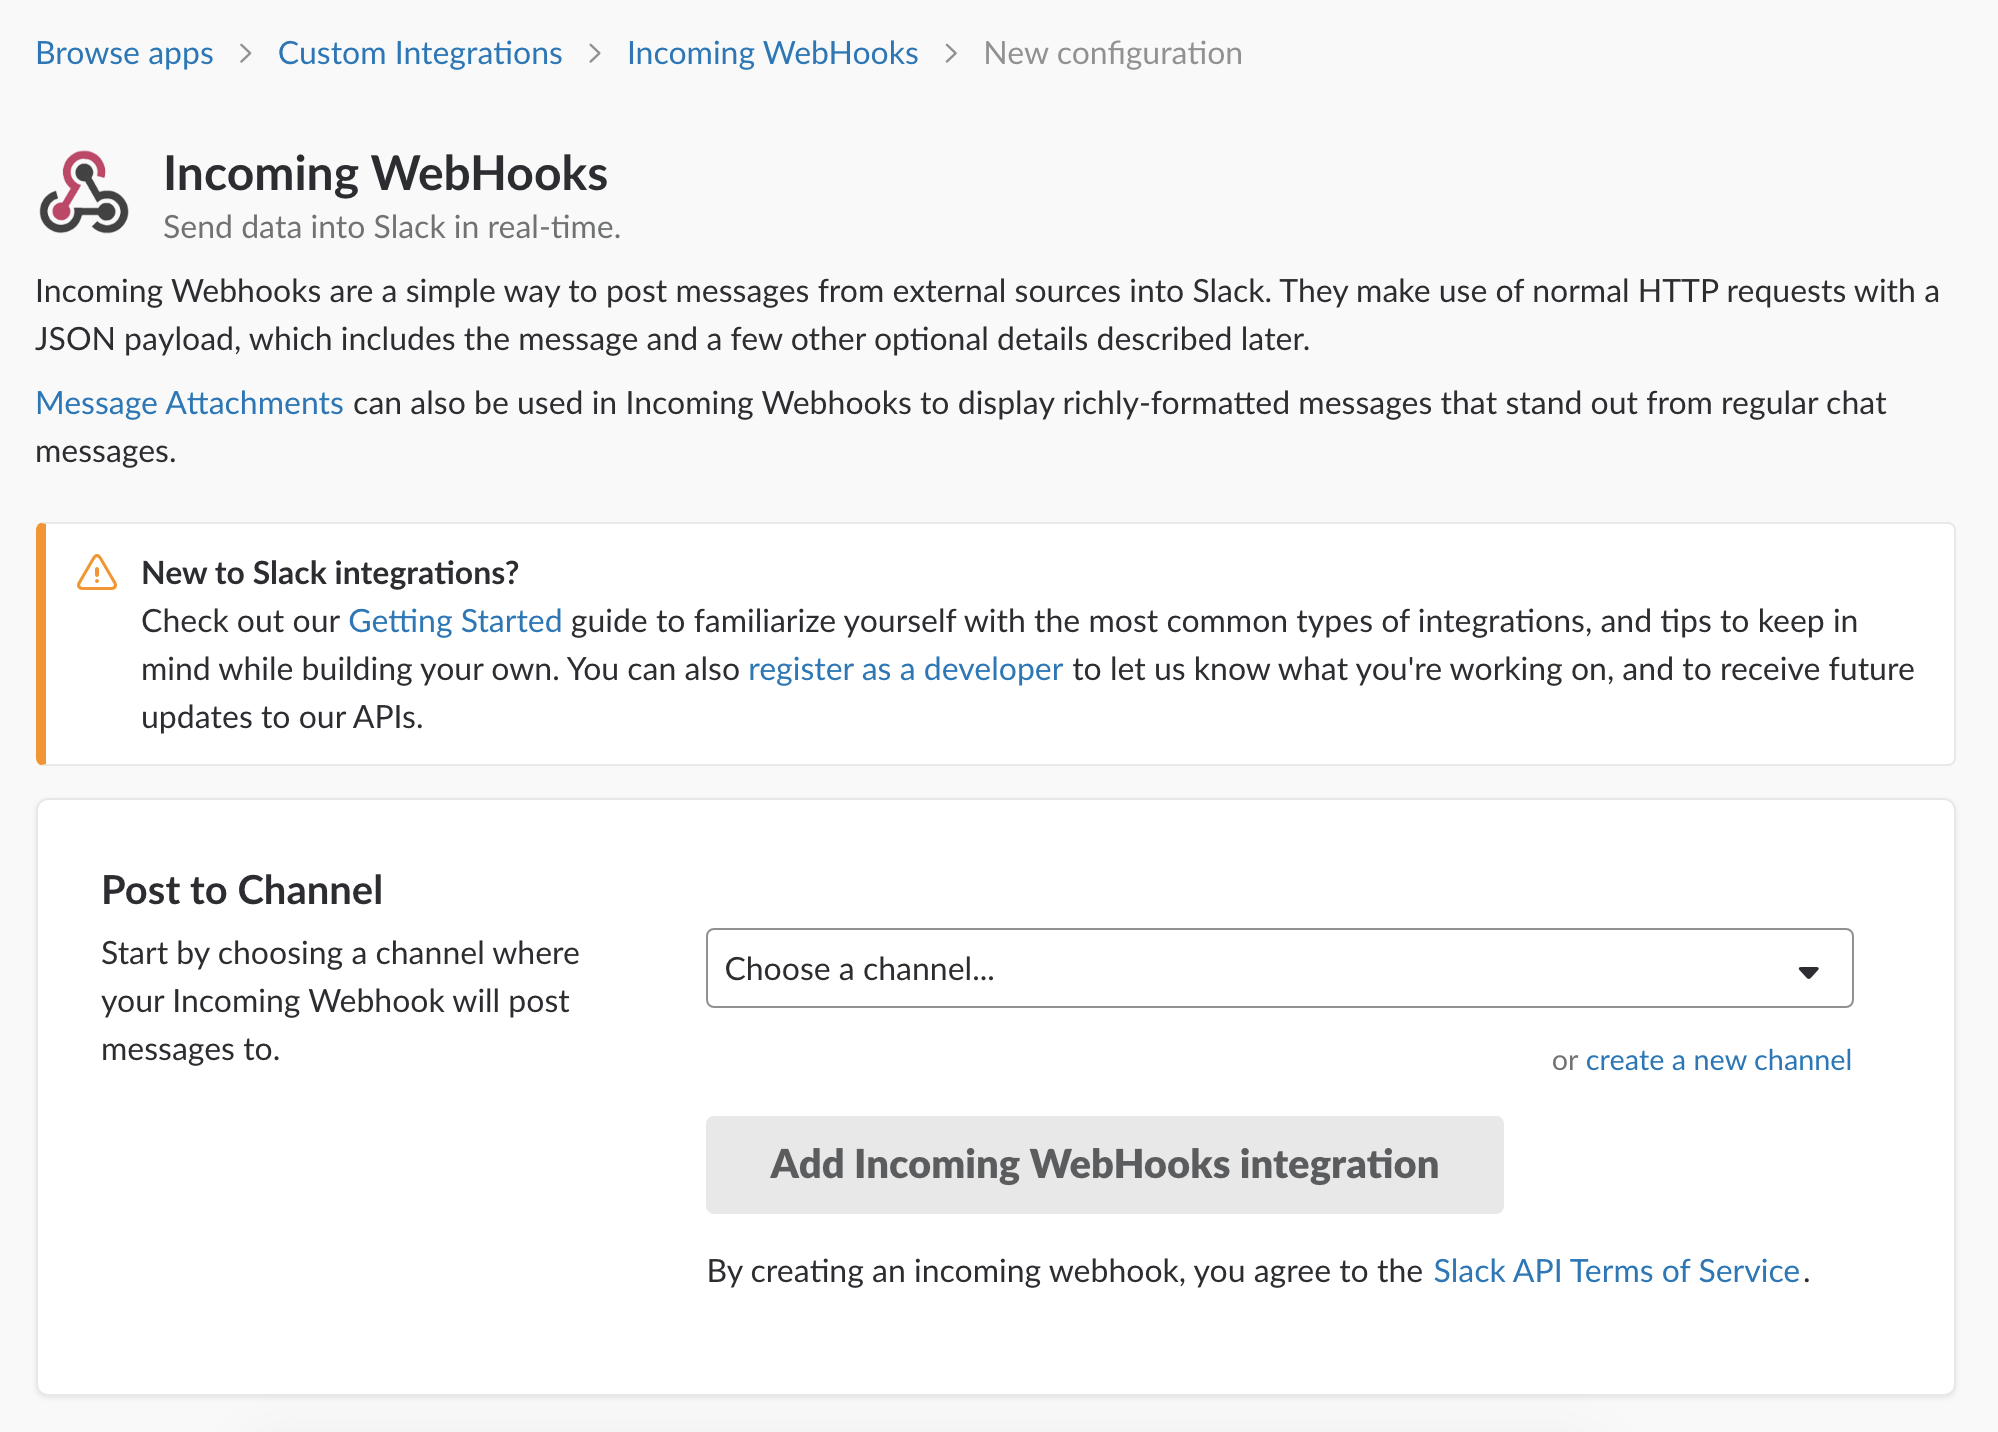 _images/incoming_webhooks_integration.png